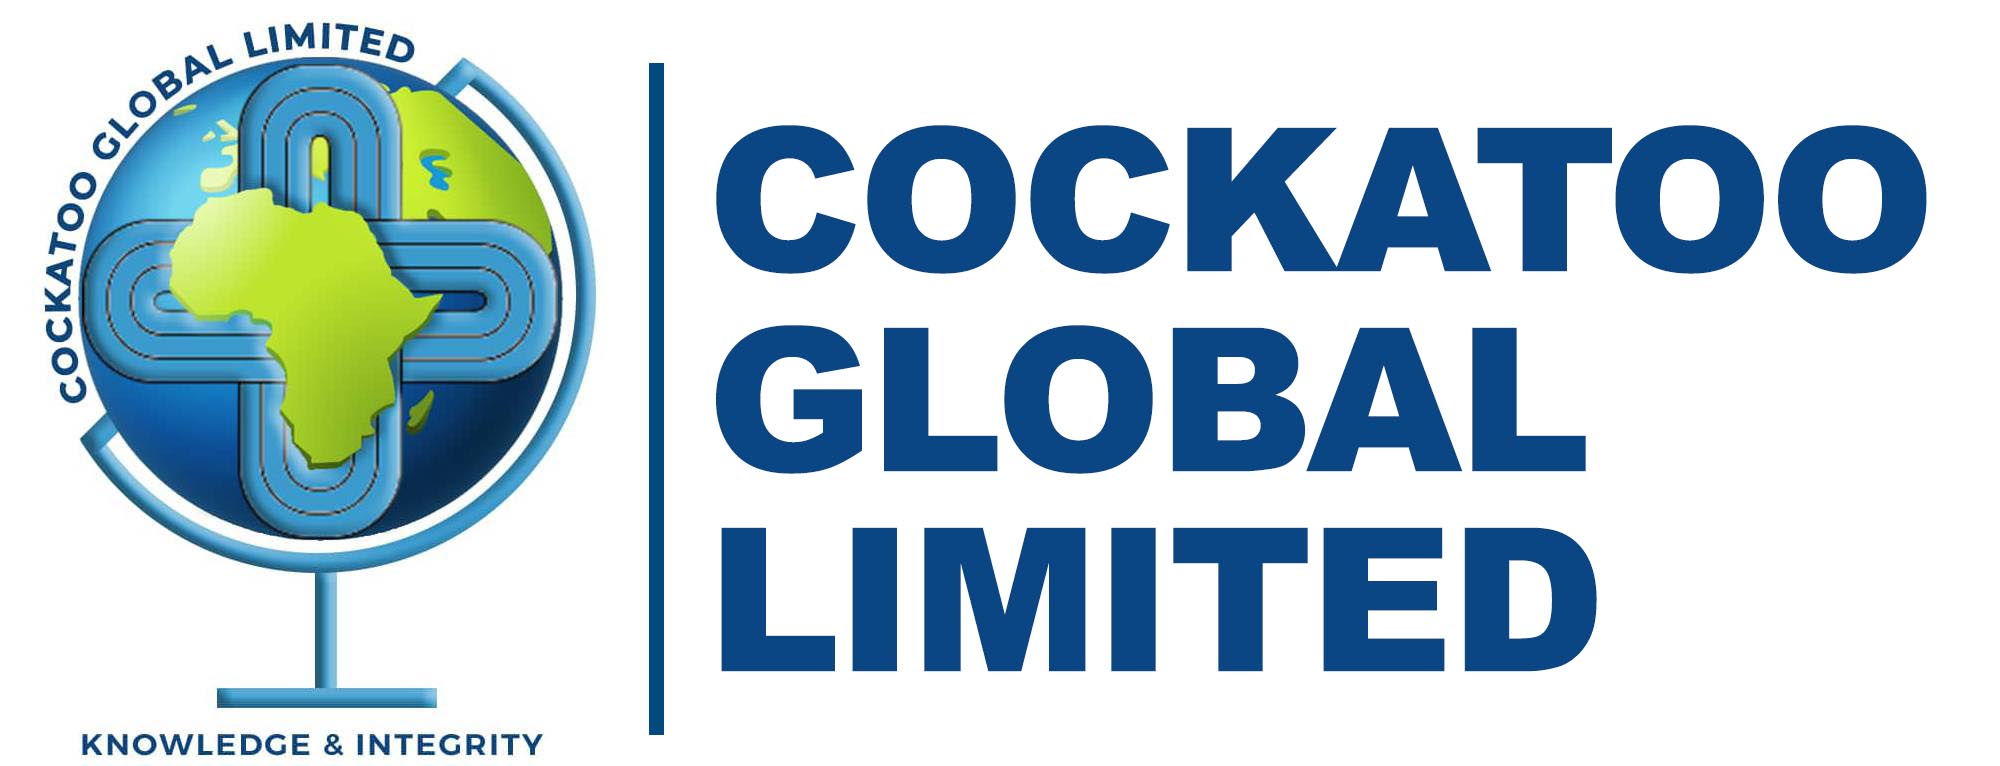 Cockatoo Global